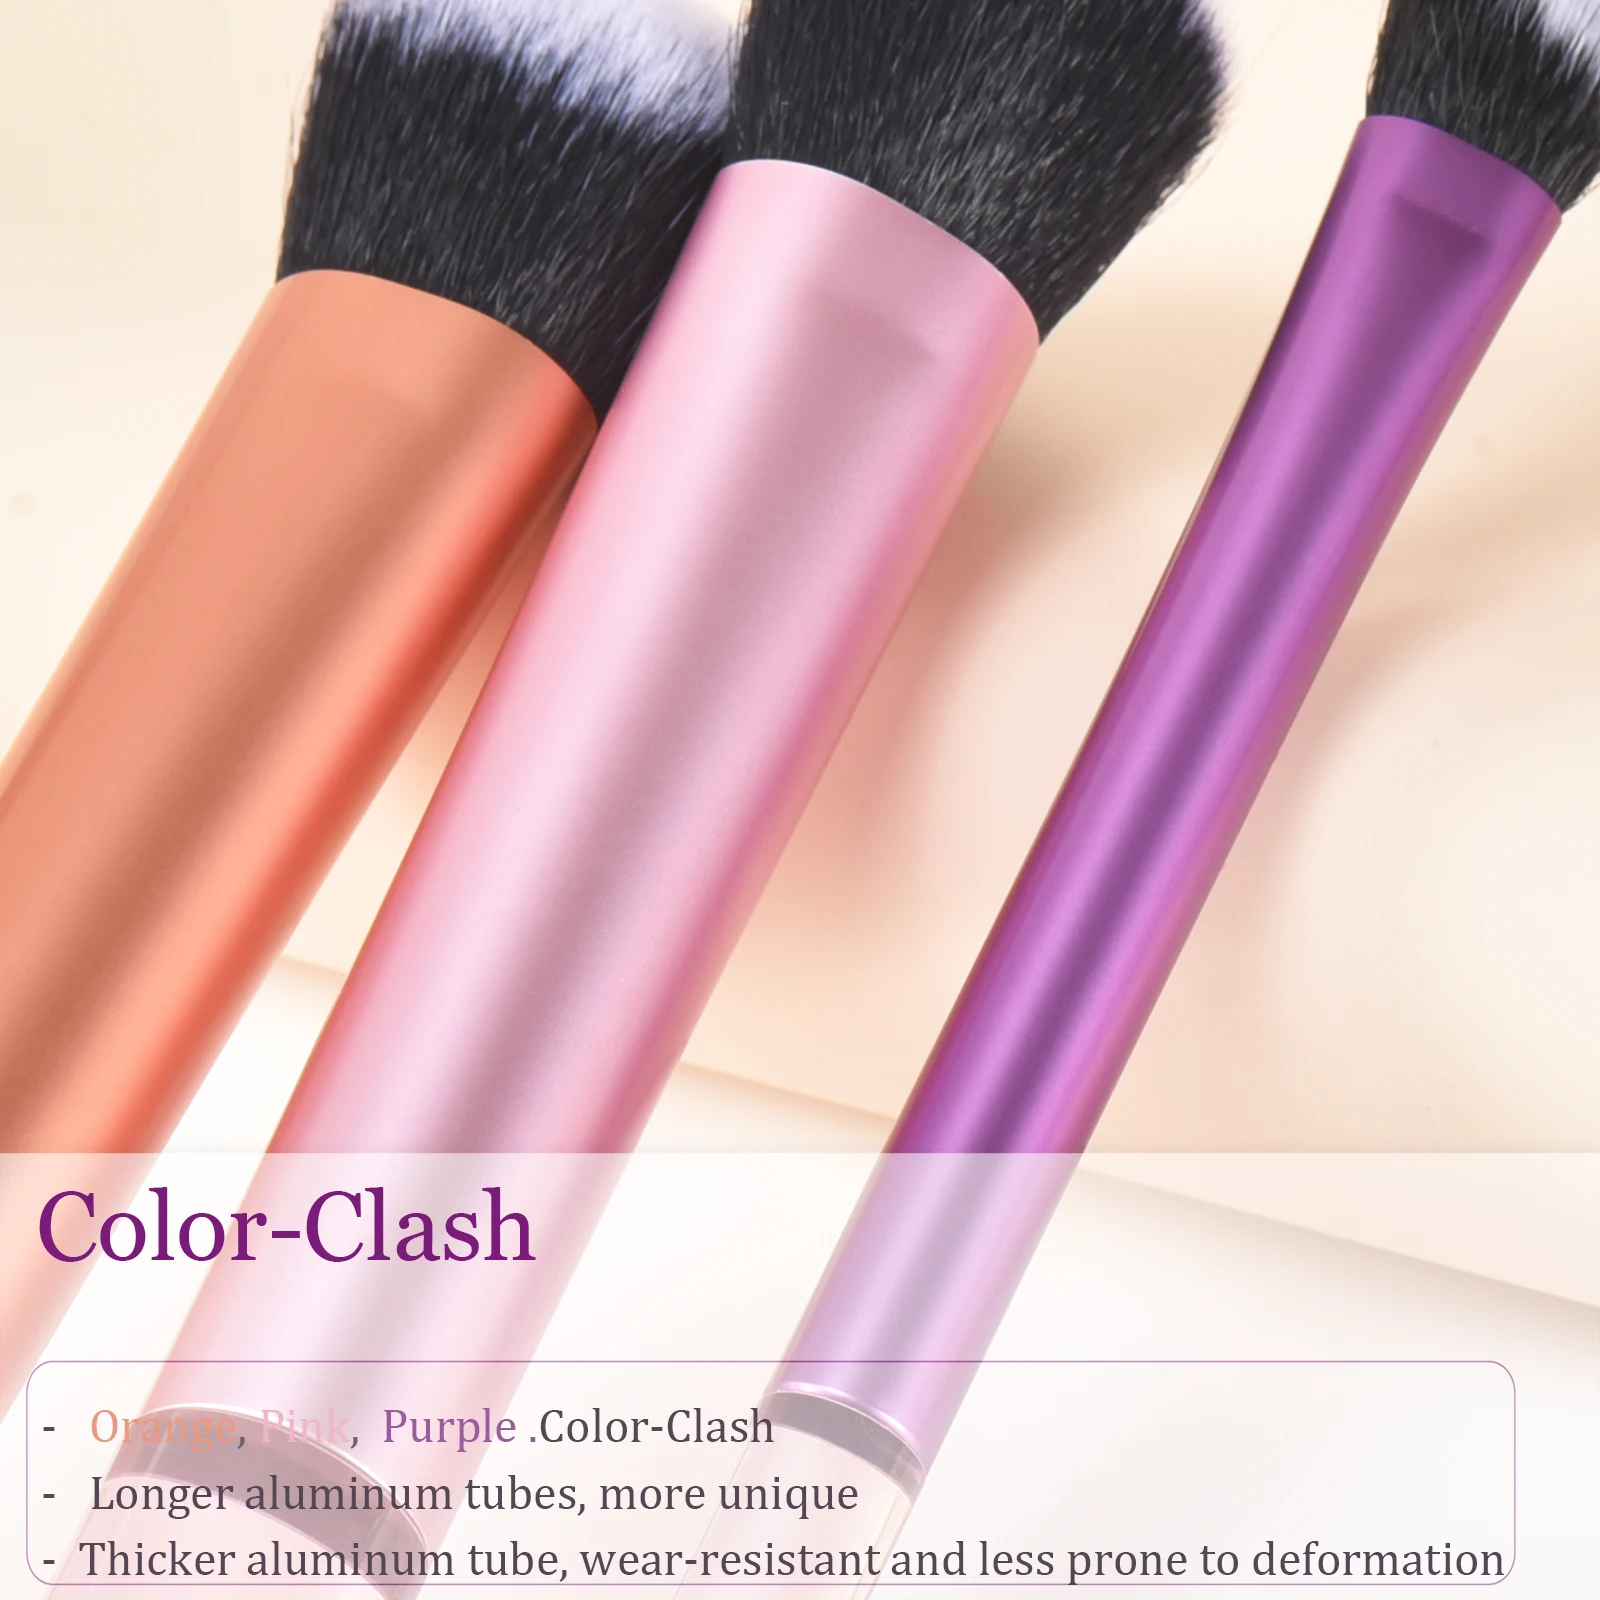 KOSMETYKI RT Color Makeup Brush Powder Foundation Contouring Brush Eyeshadow brush quality makeup tools